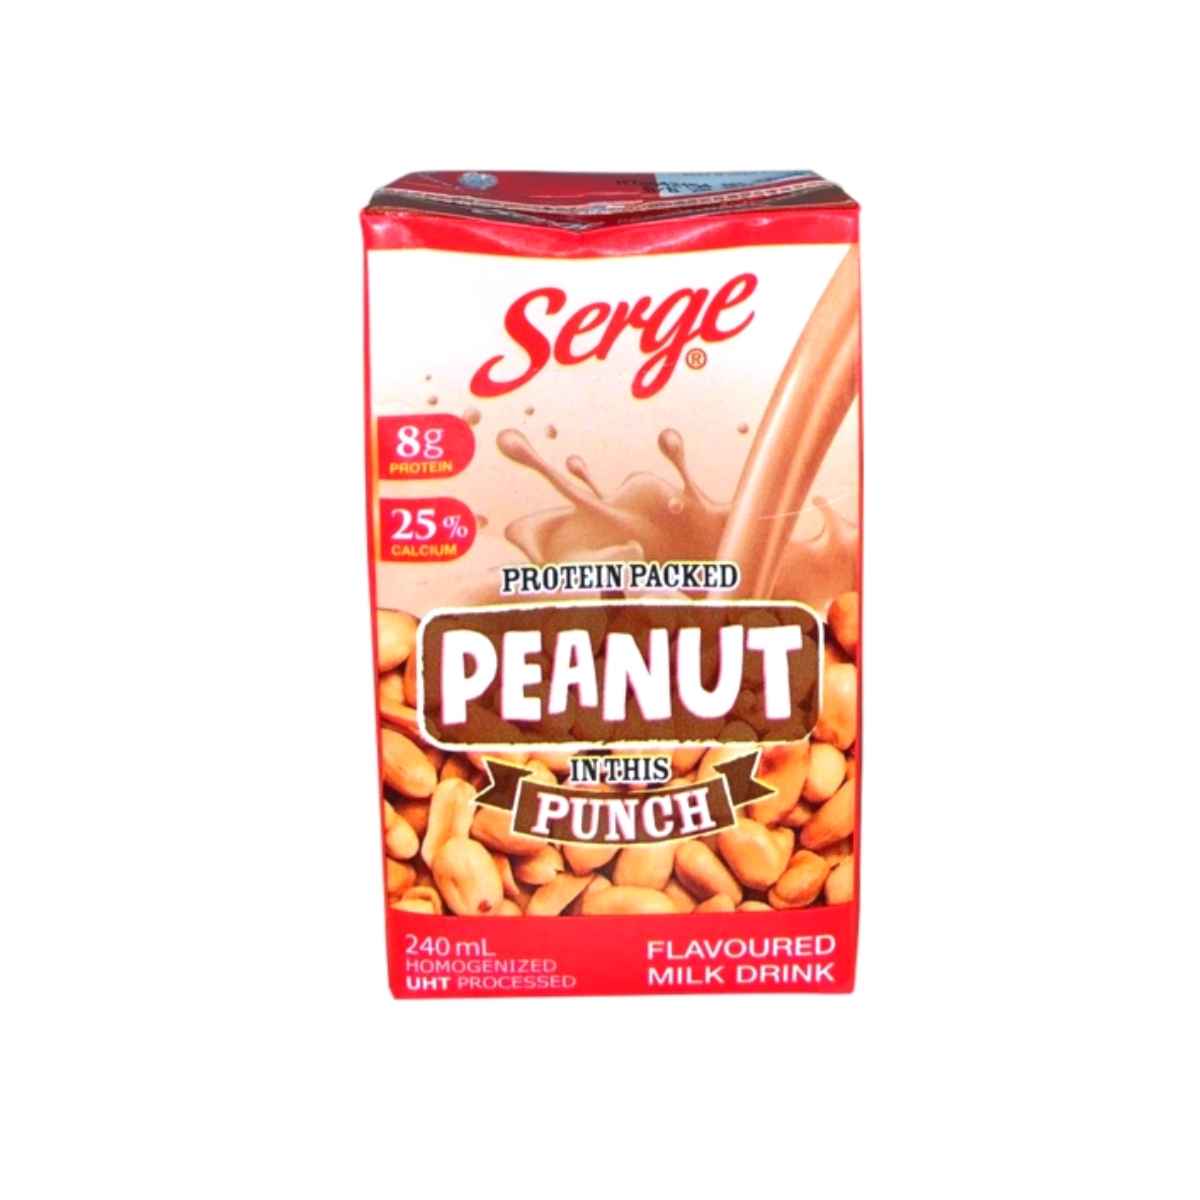 Serge Peanut Punch 240ml